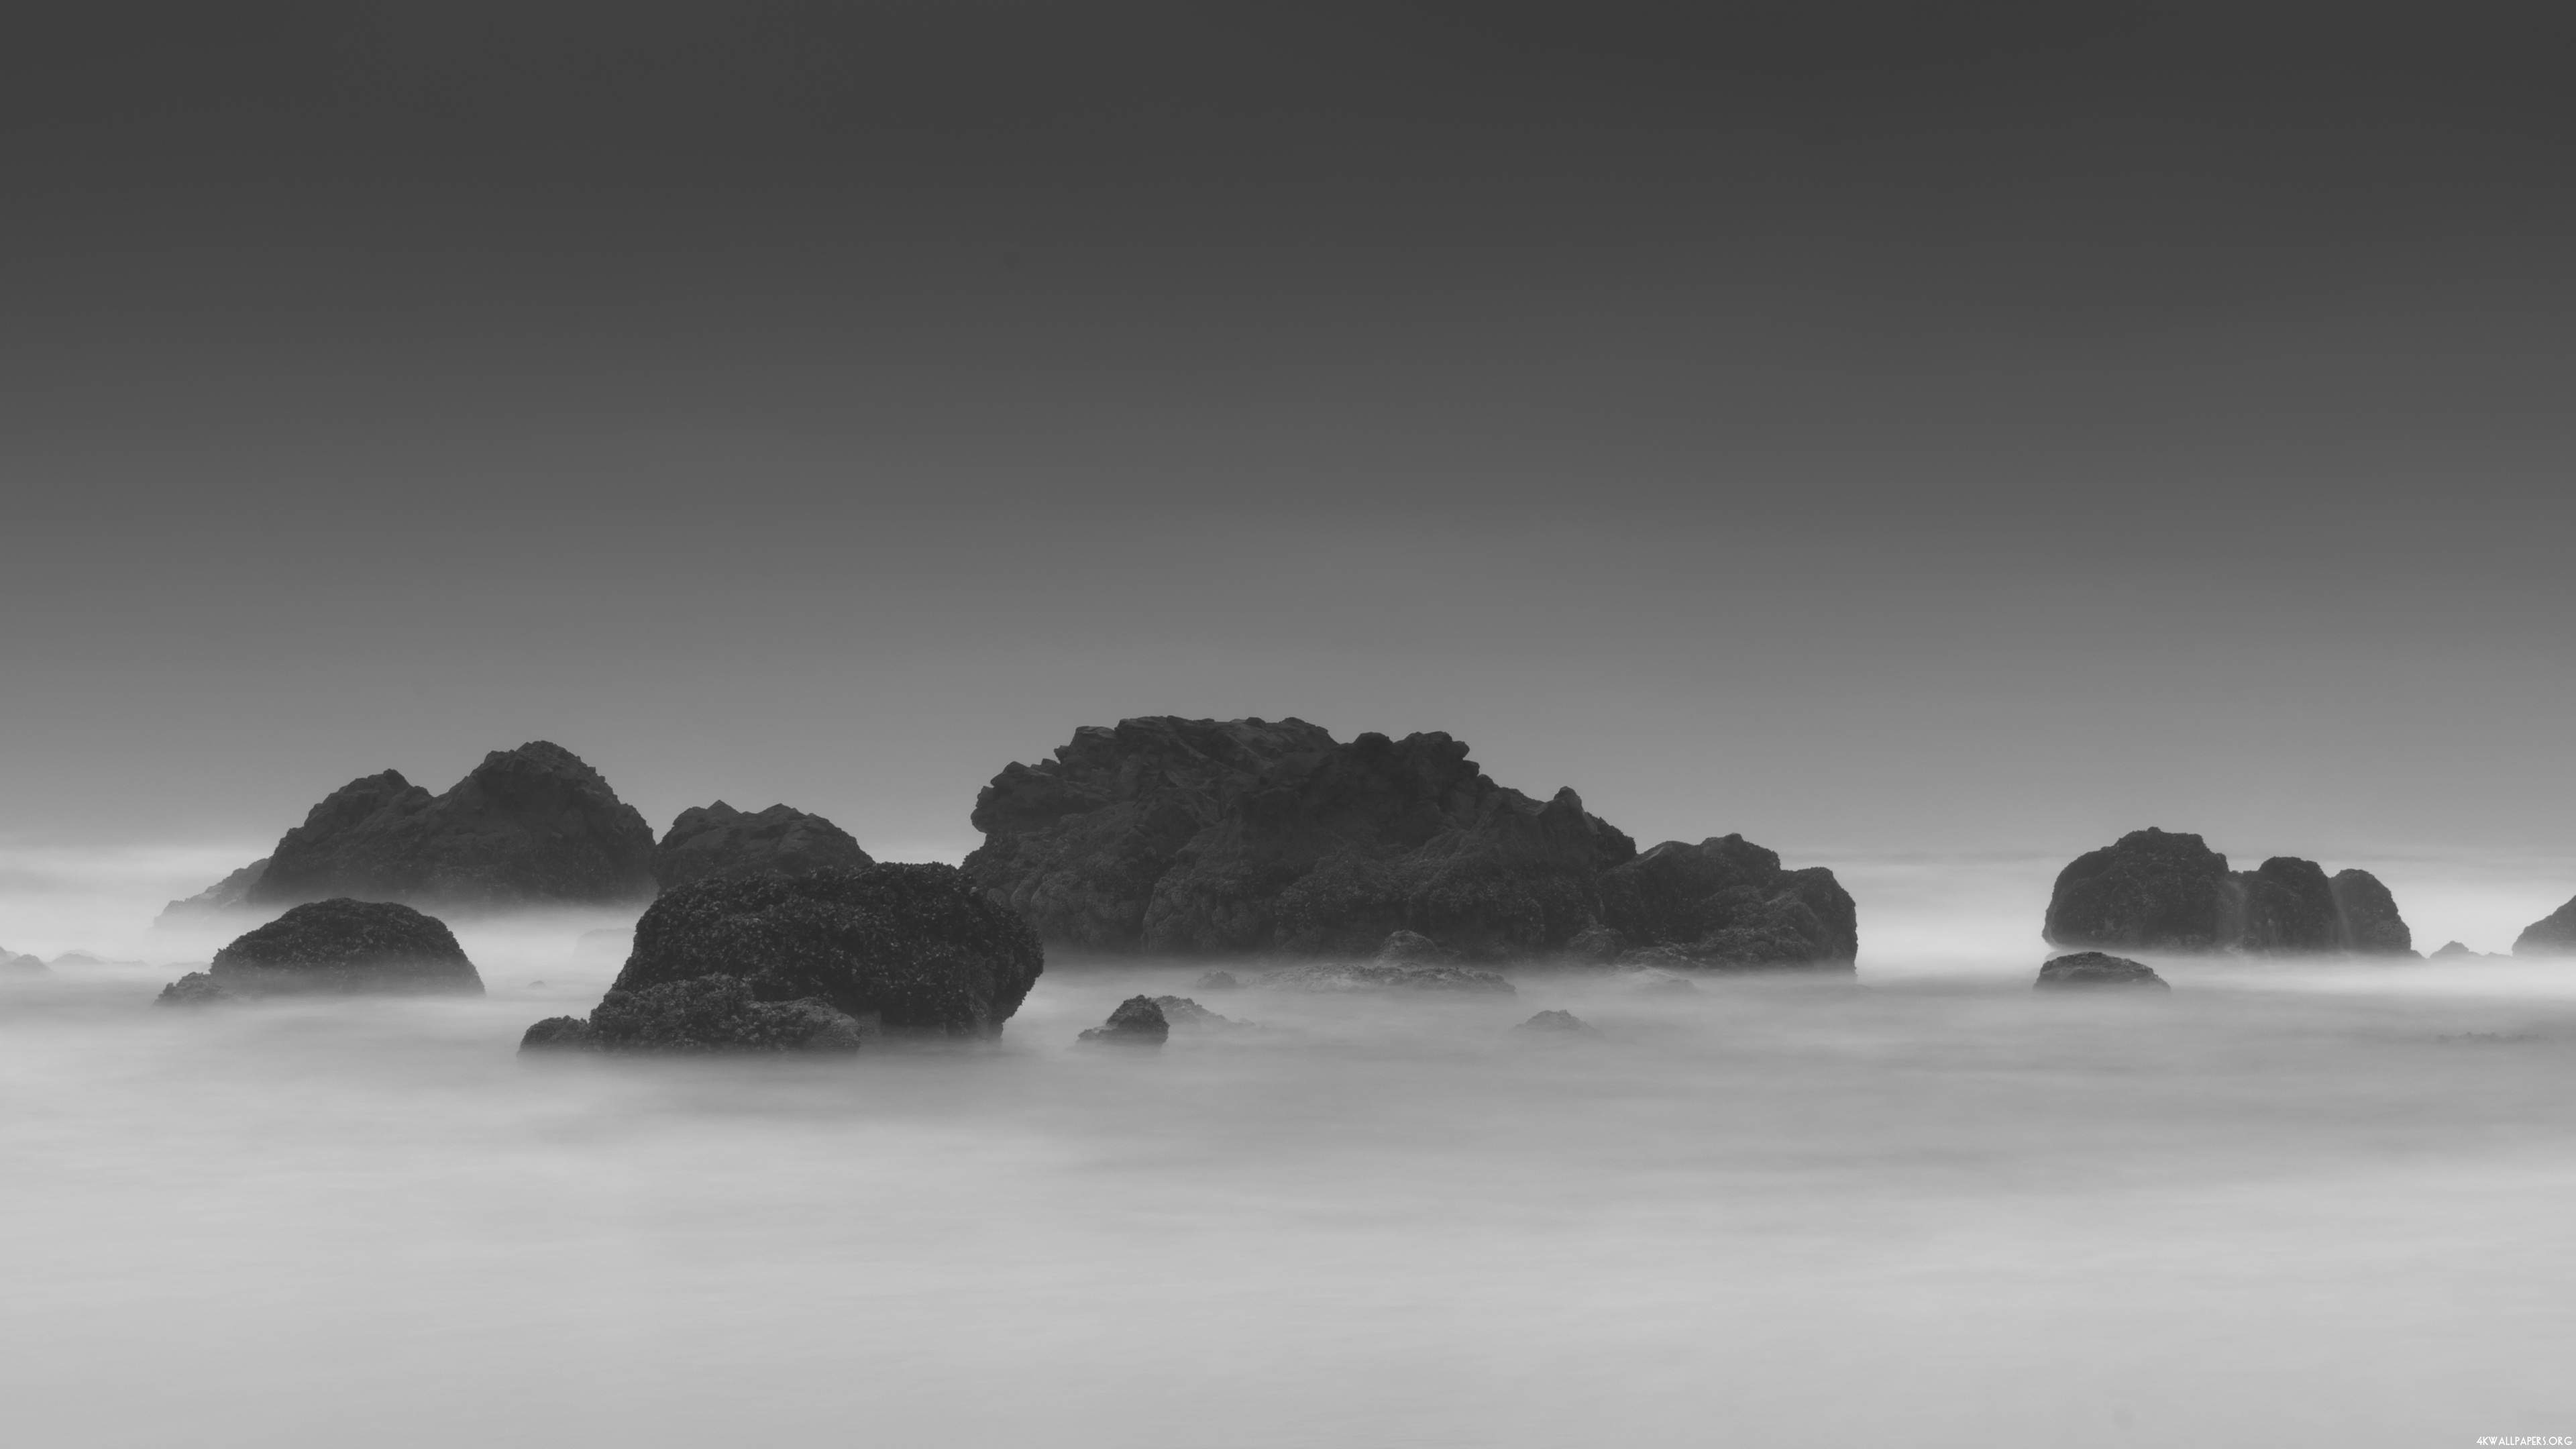 Desktop Wallpaper 4k Resolution Black And White - Grey Sea With Rocks